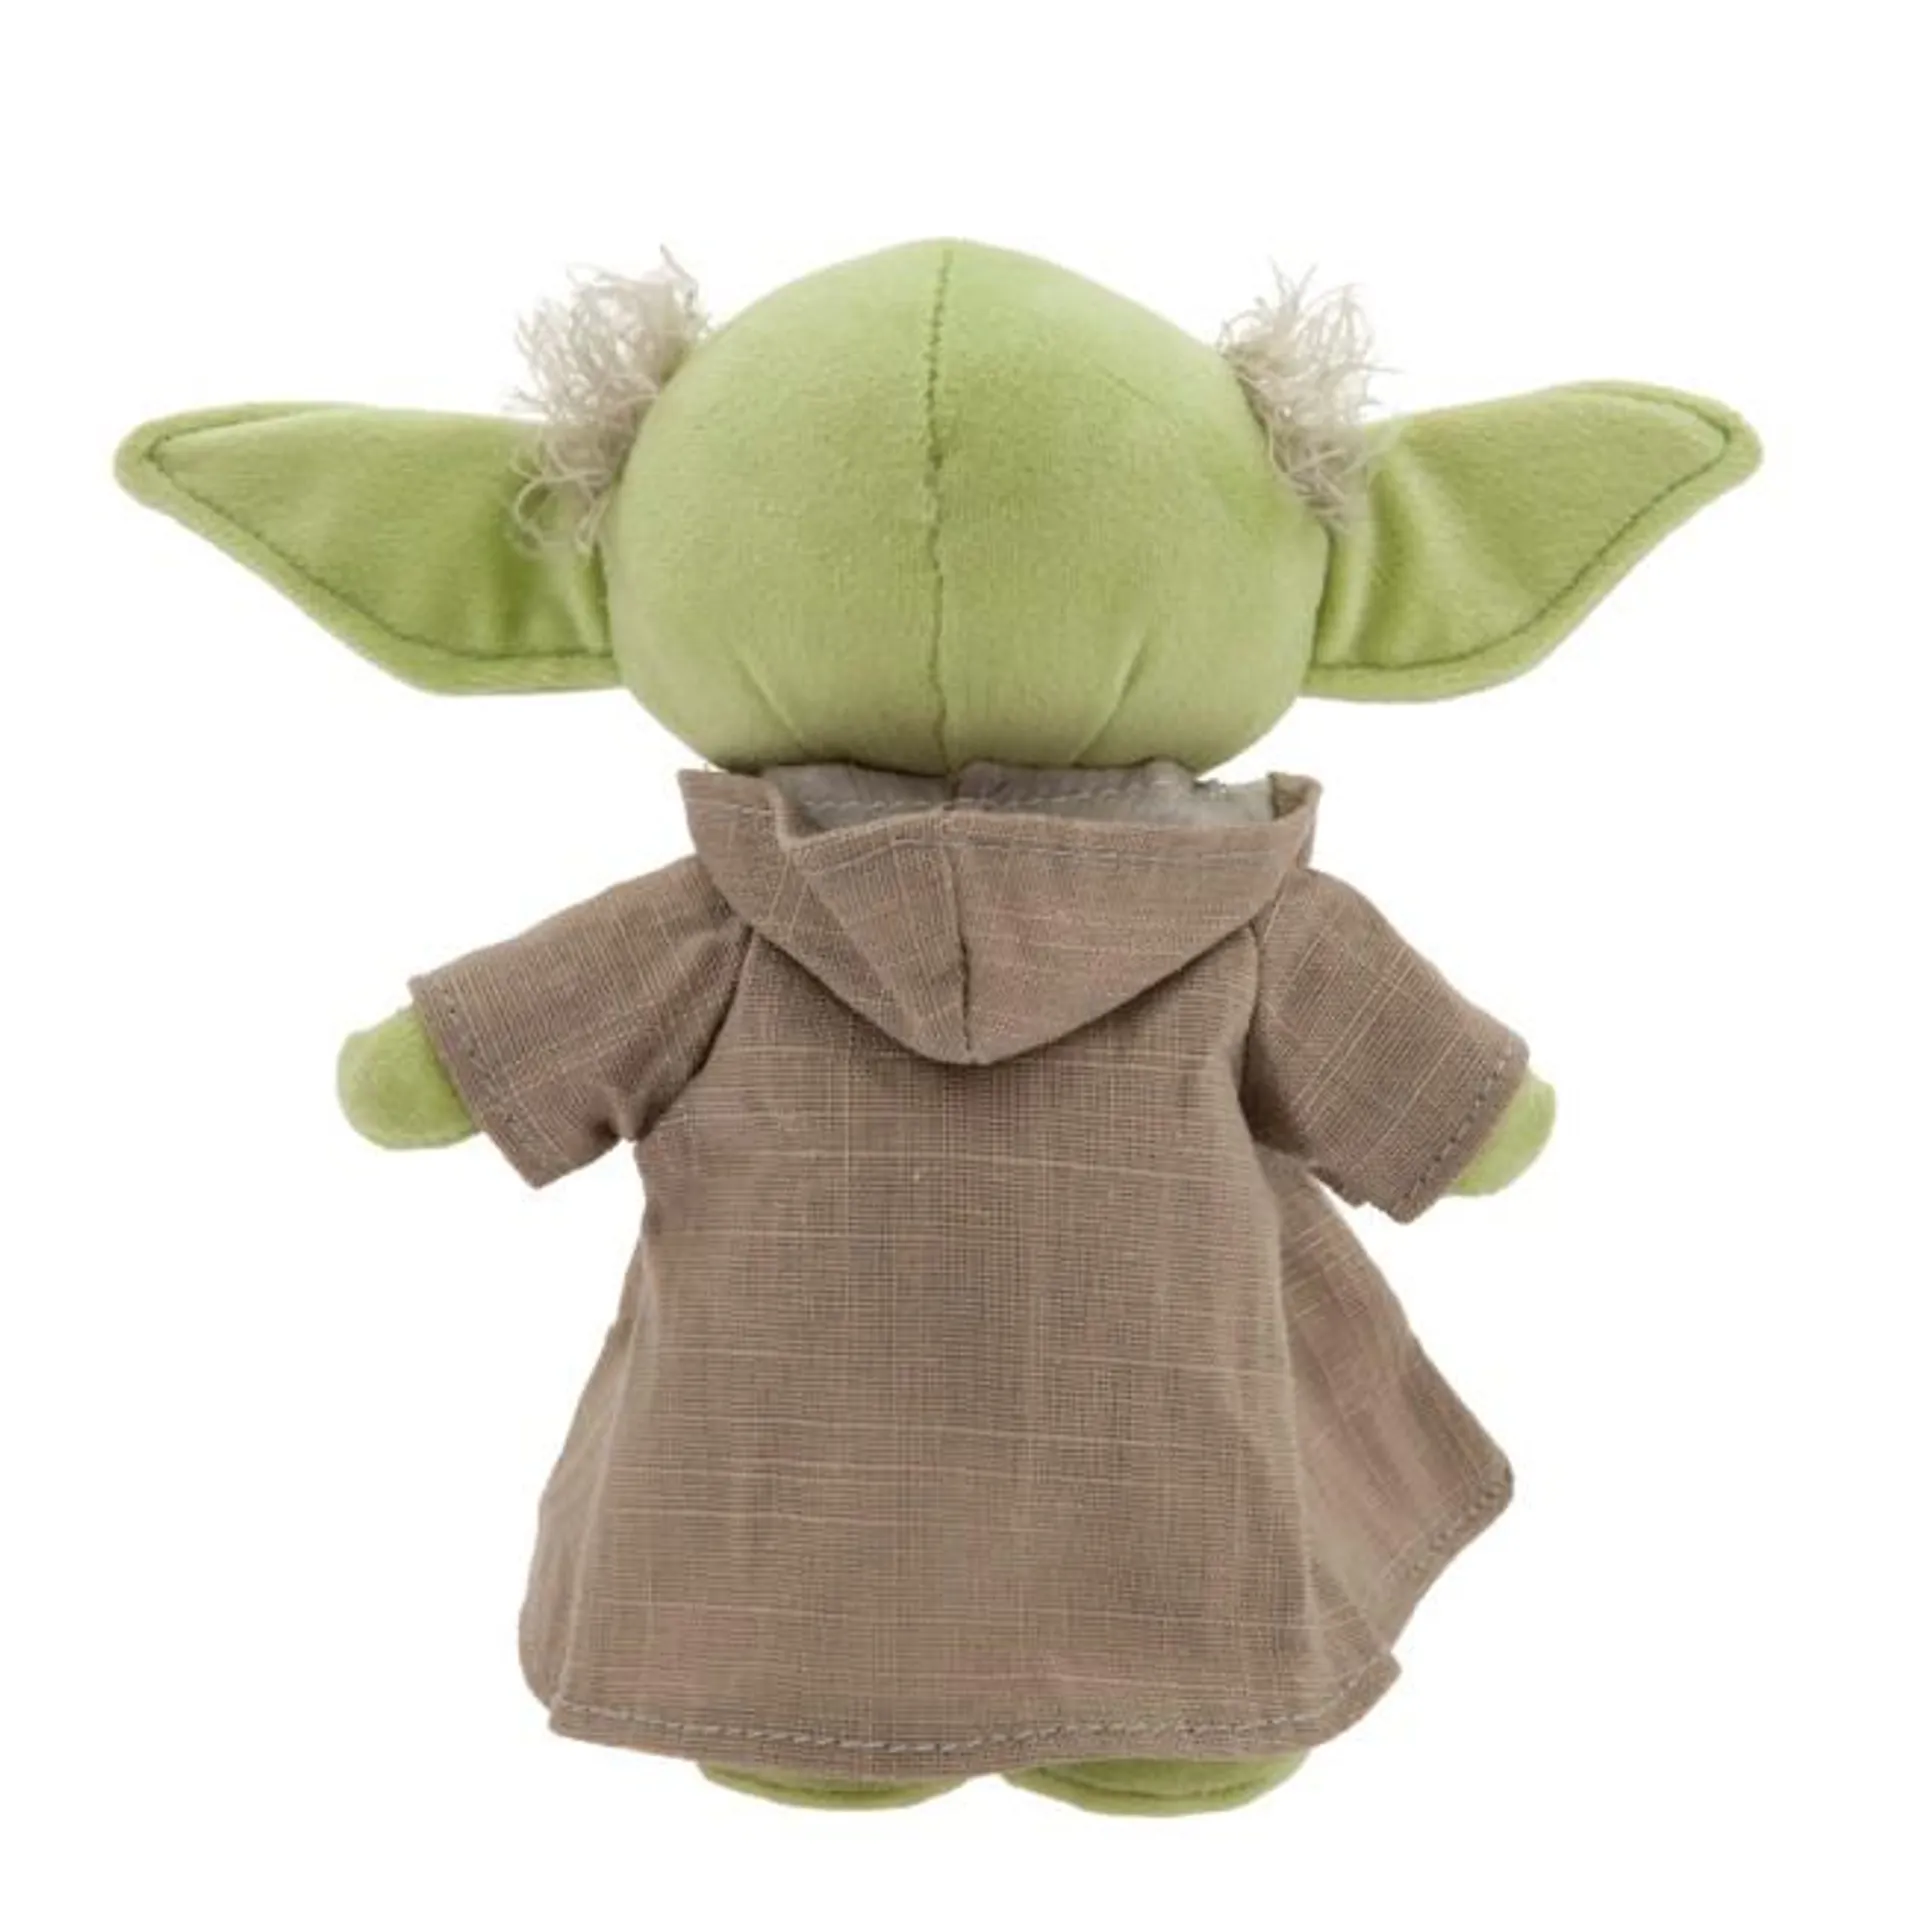 Disney Store Yoda nuiMOs Small Soft Toy, Star Wars